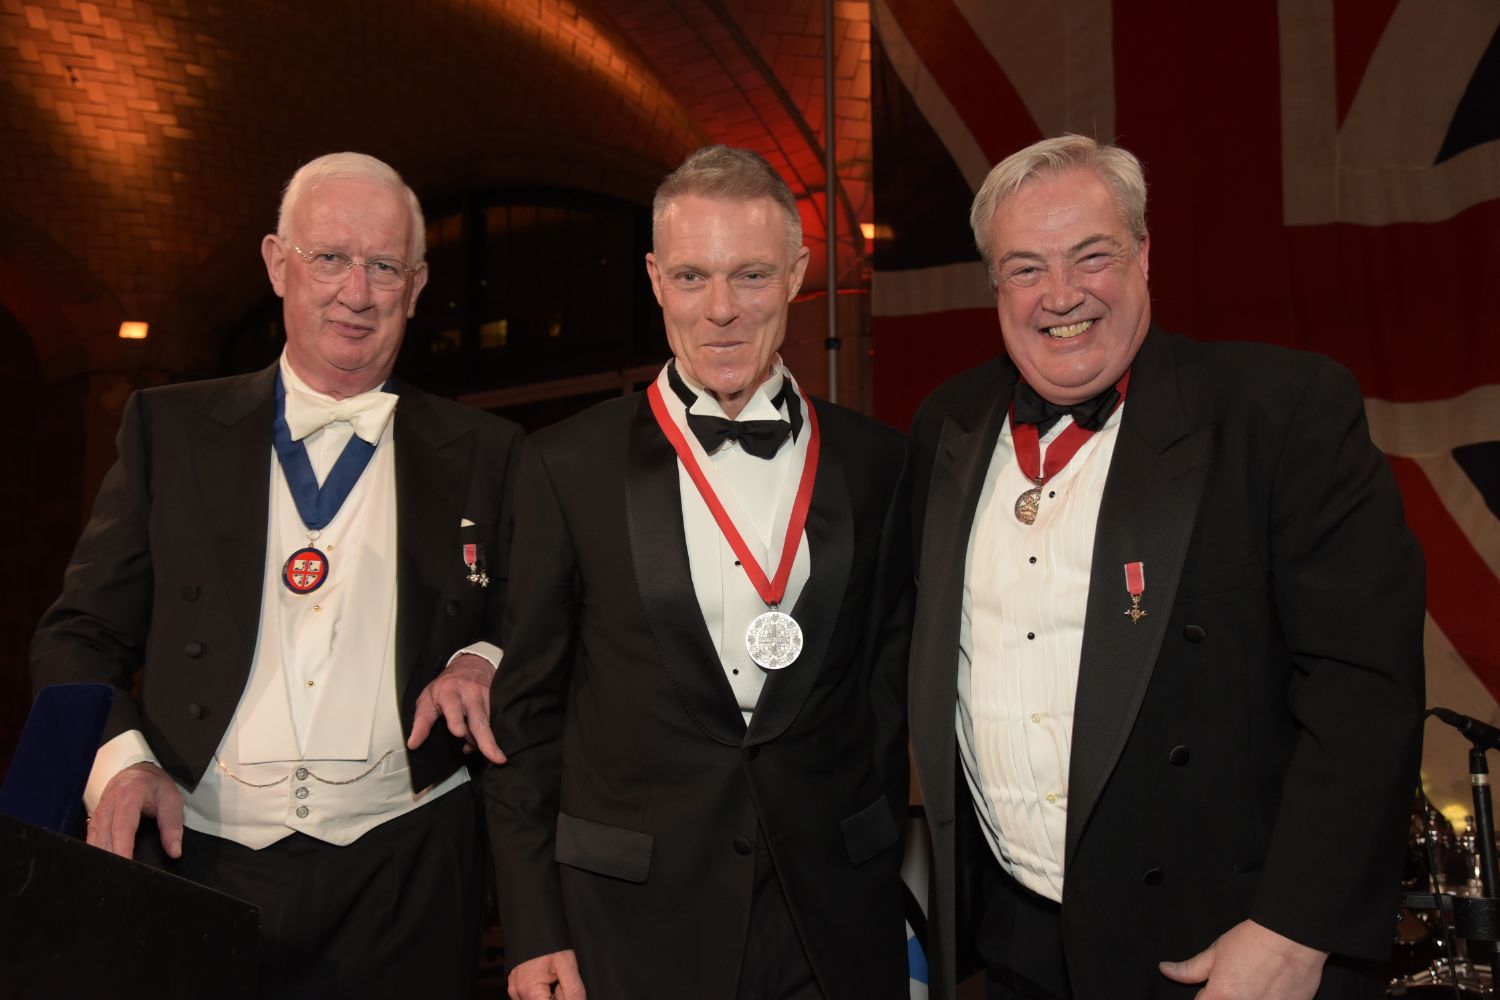  C. Hugh Hildesley MBE, Tim Marlow and Philip Warner OBE 